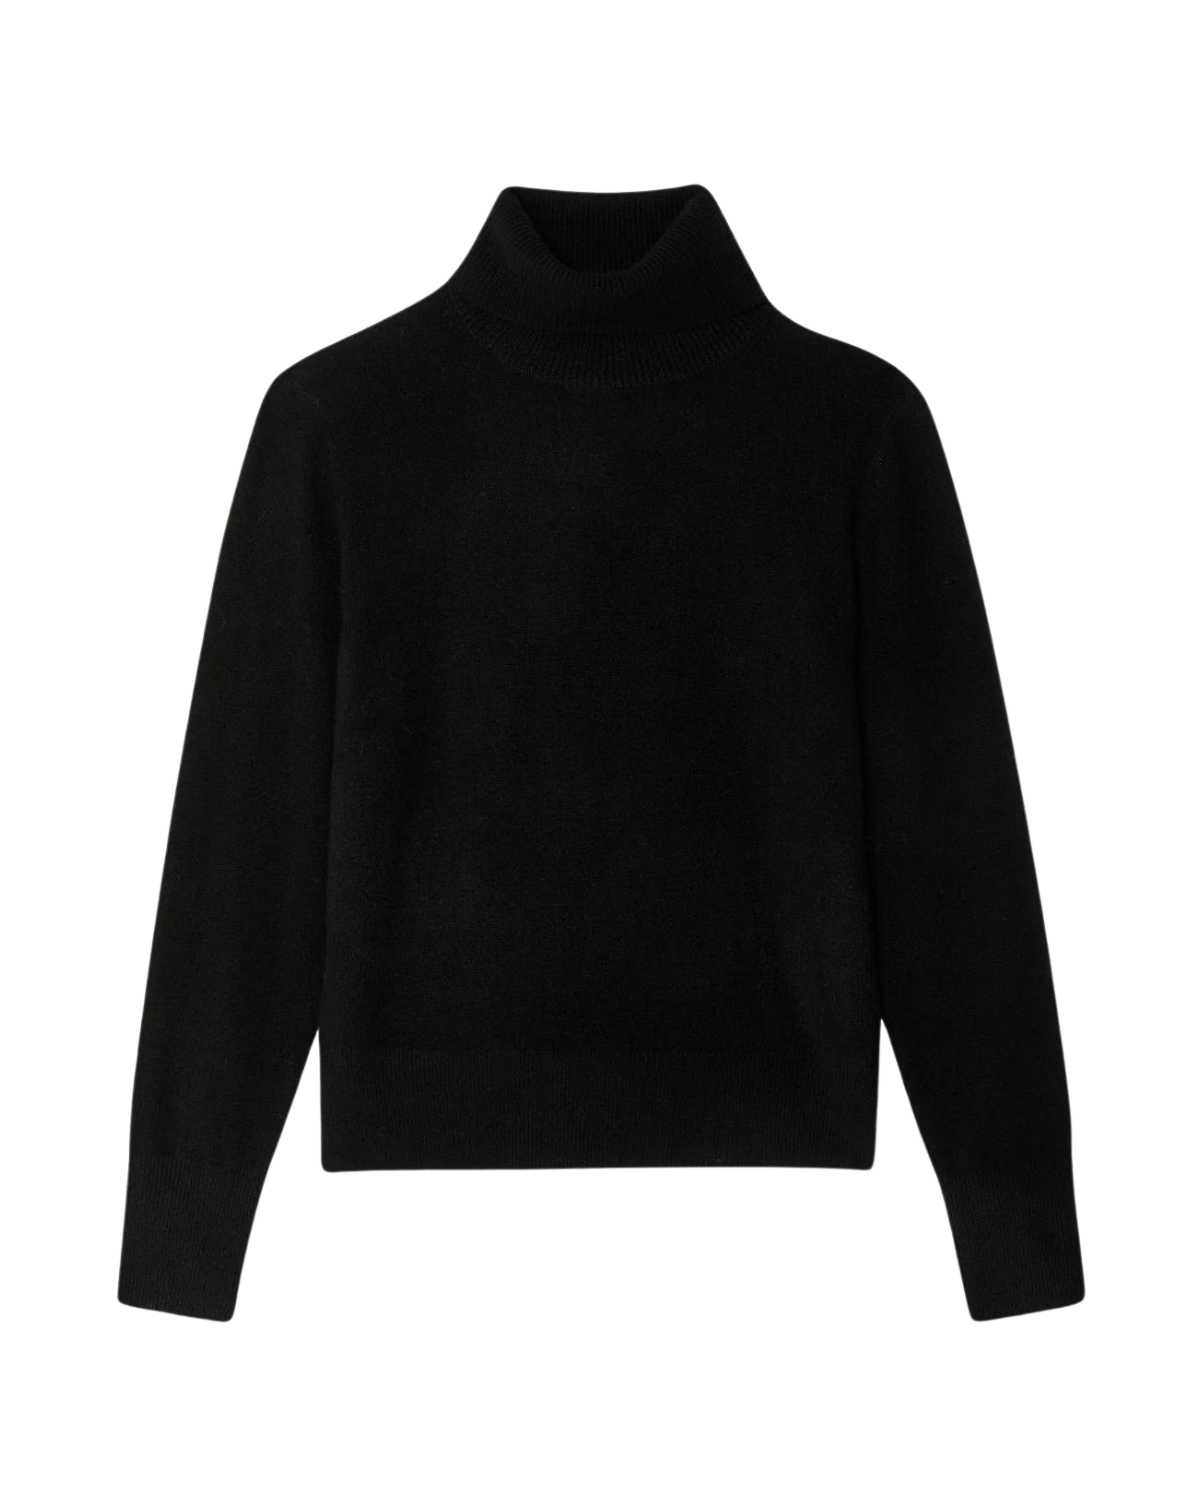 Cashmere Essential Turtleneck Sweater (Black)